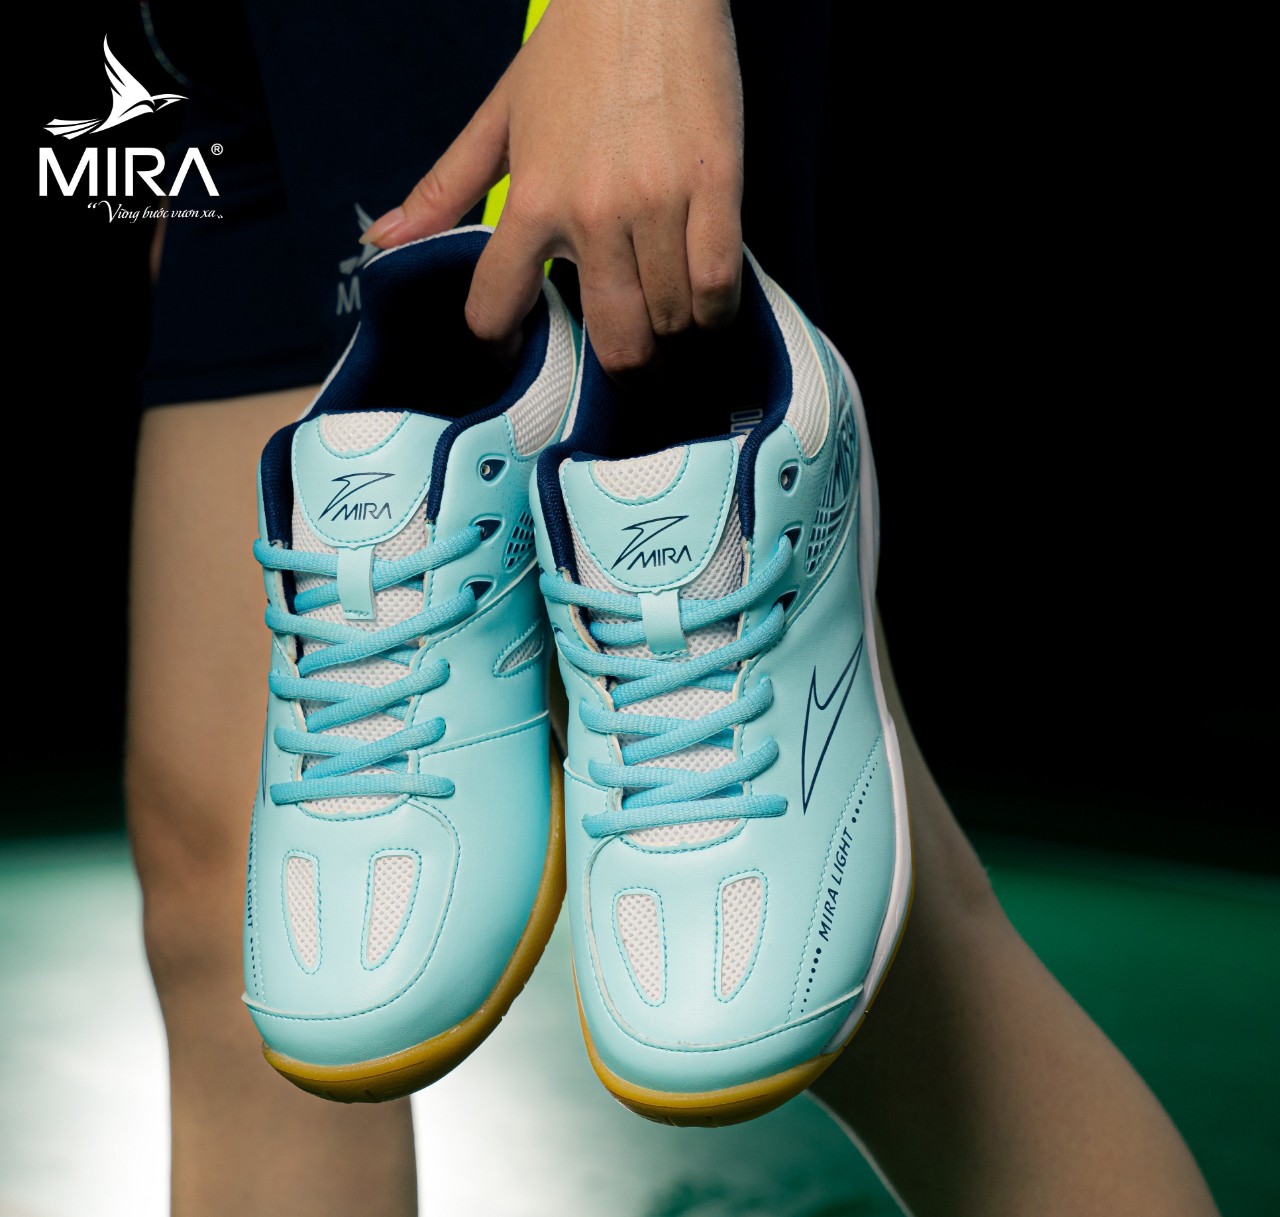 Mira Light authentics badminton shoes